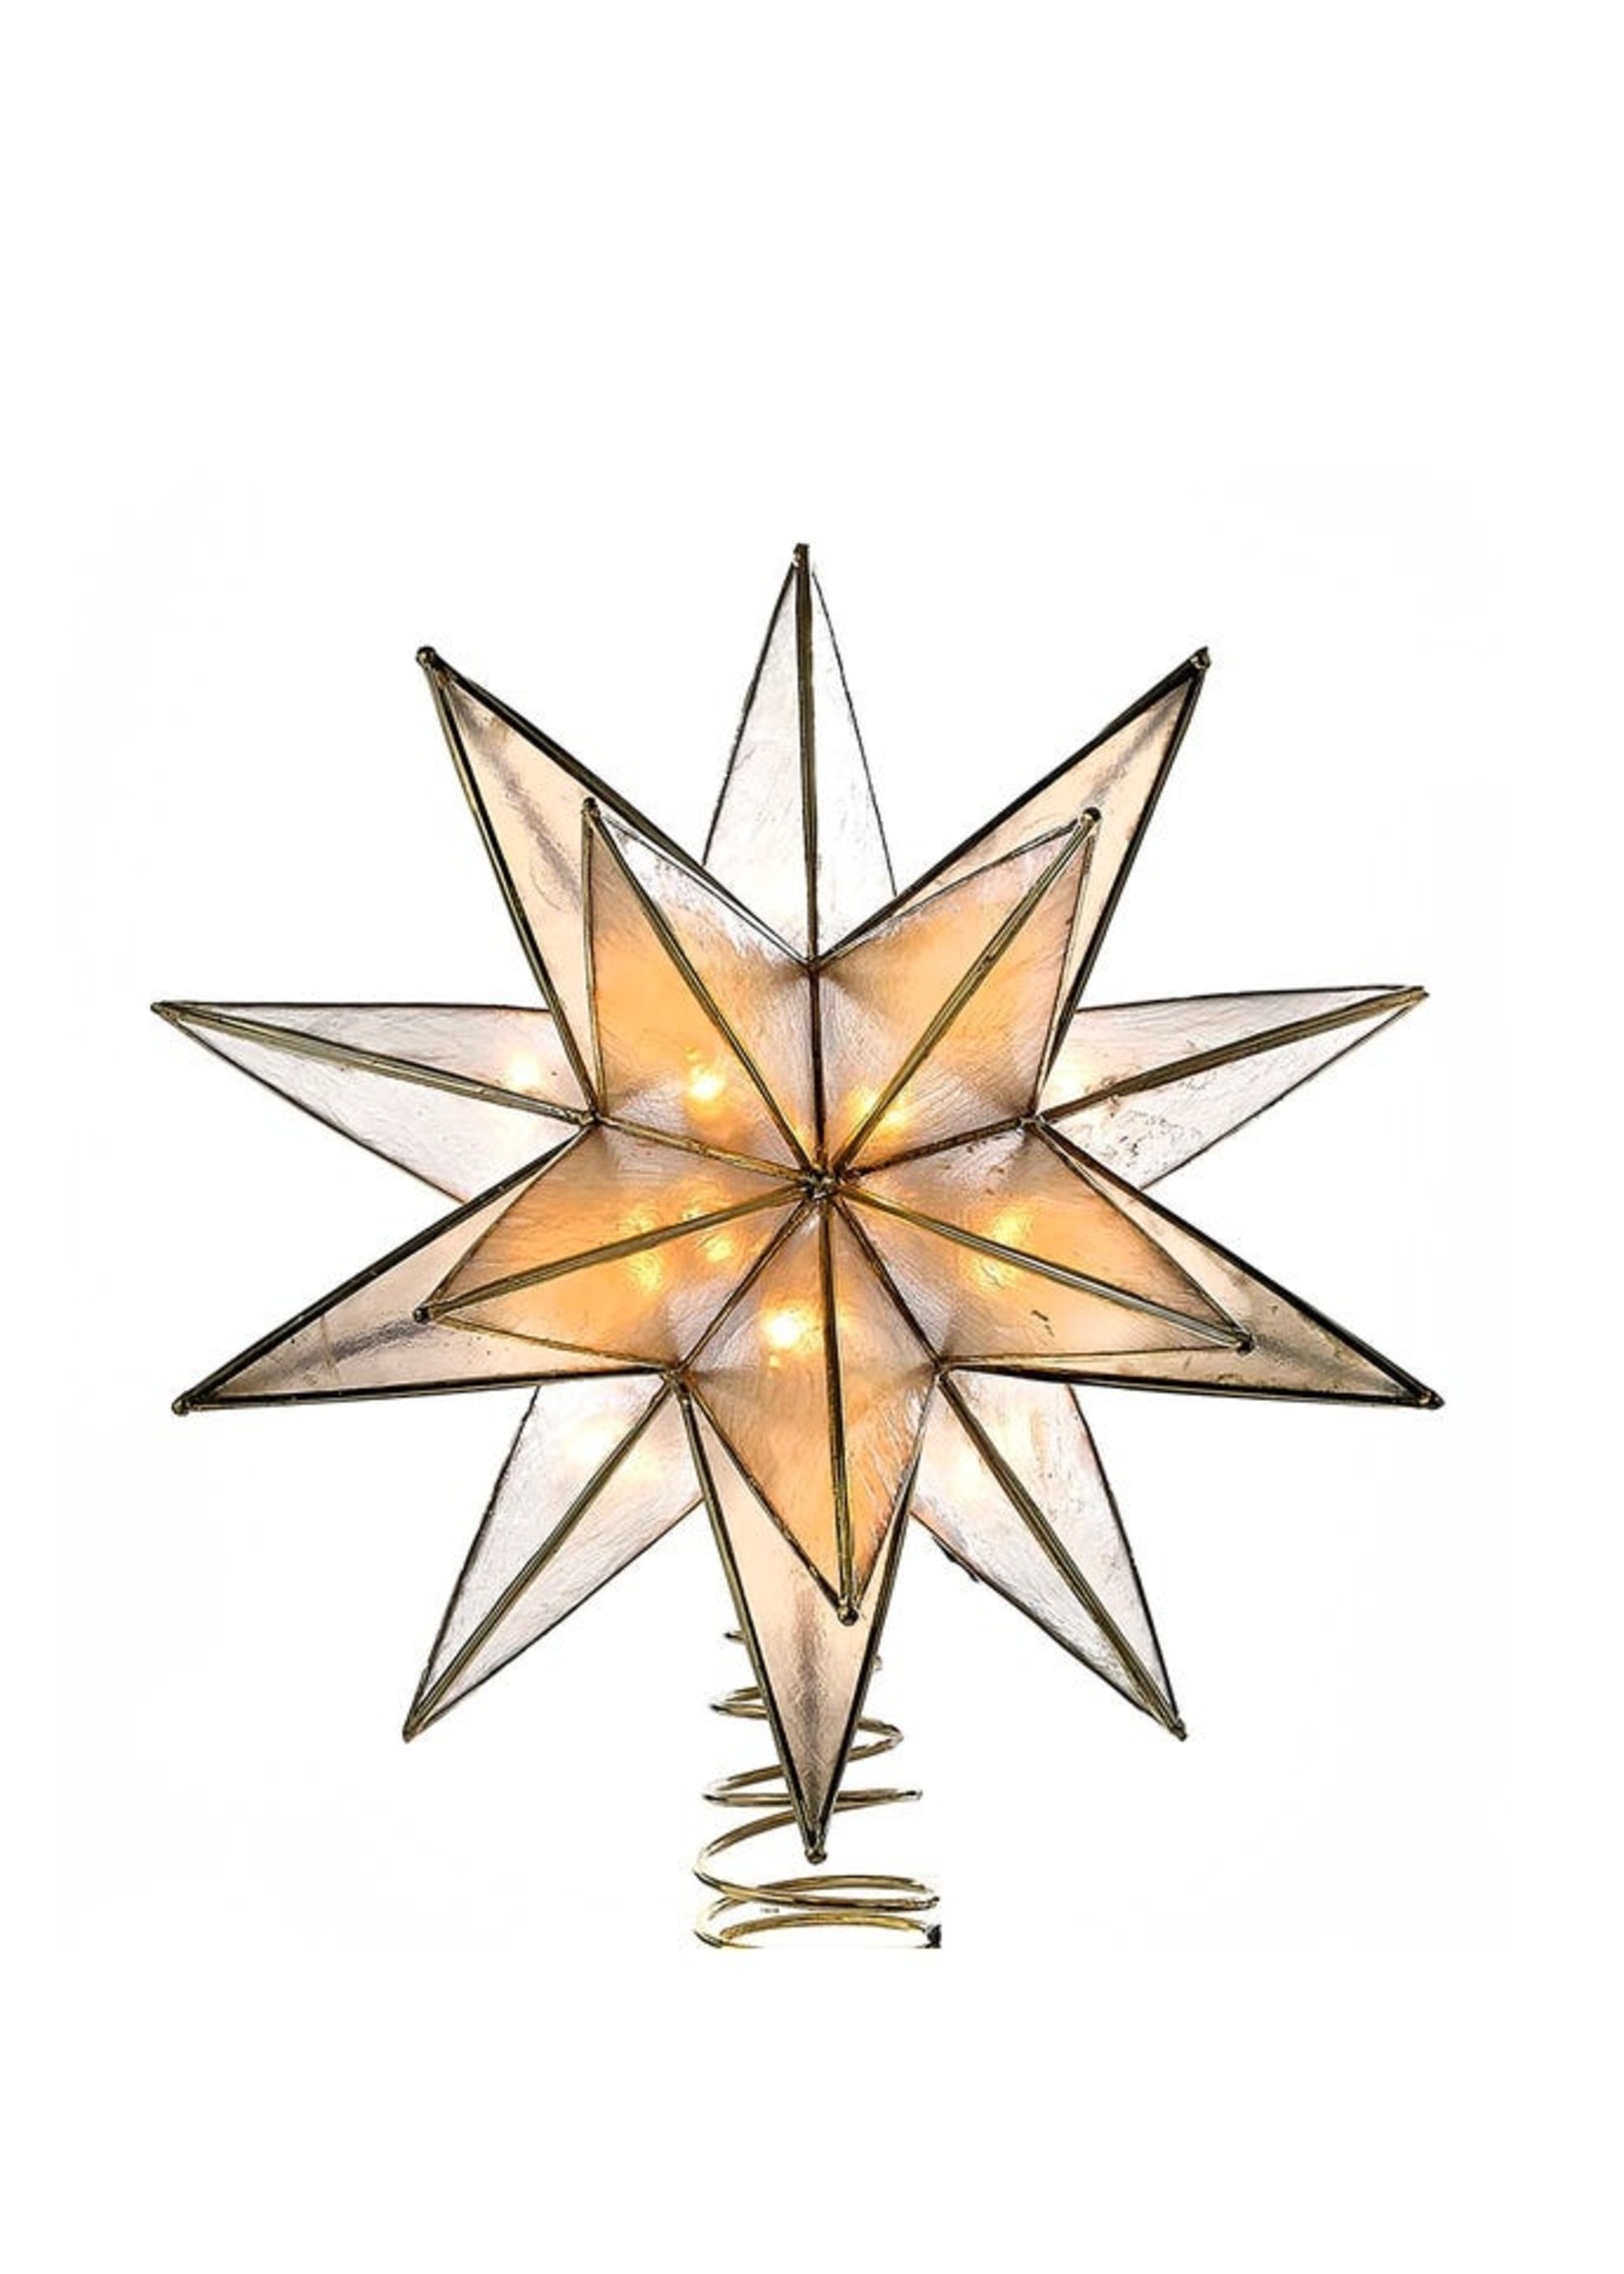 8.25" UL 10-light Capiz gold star treetop